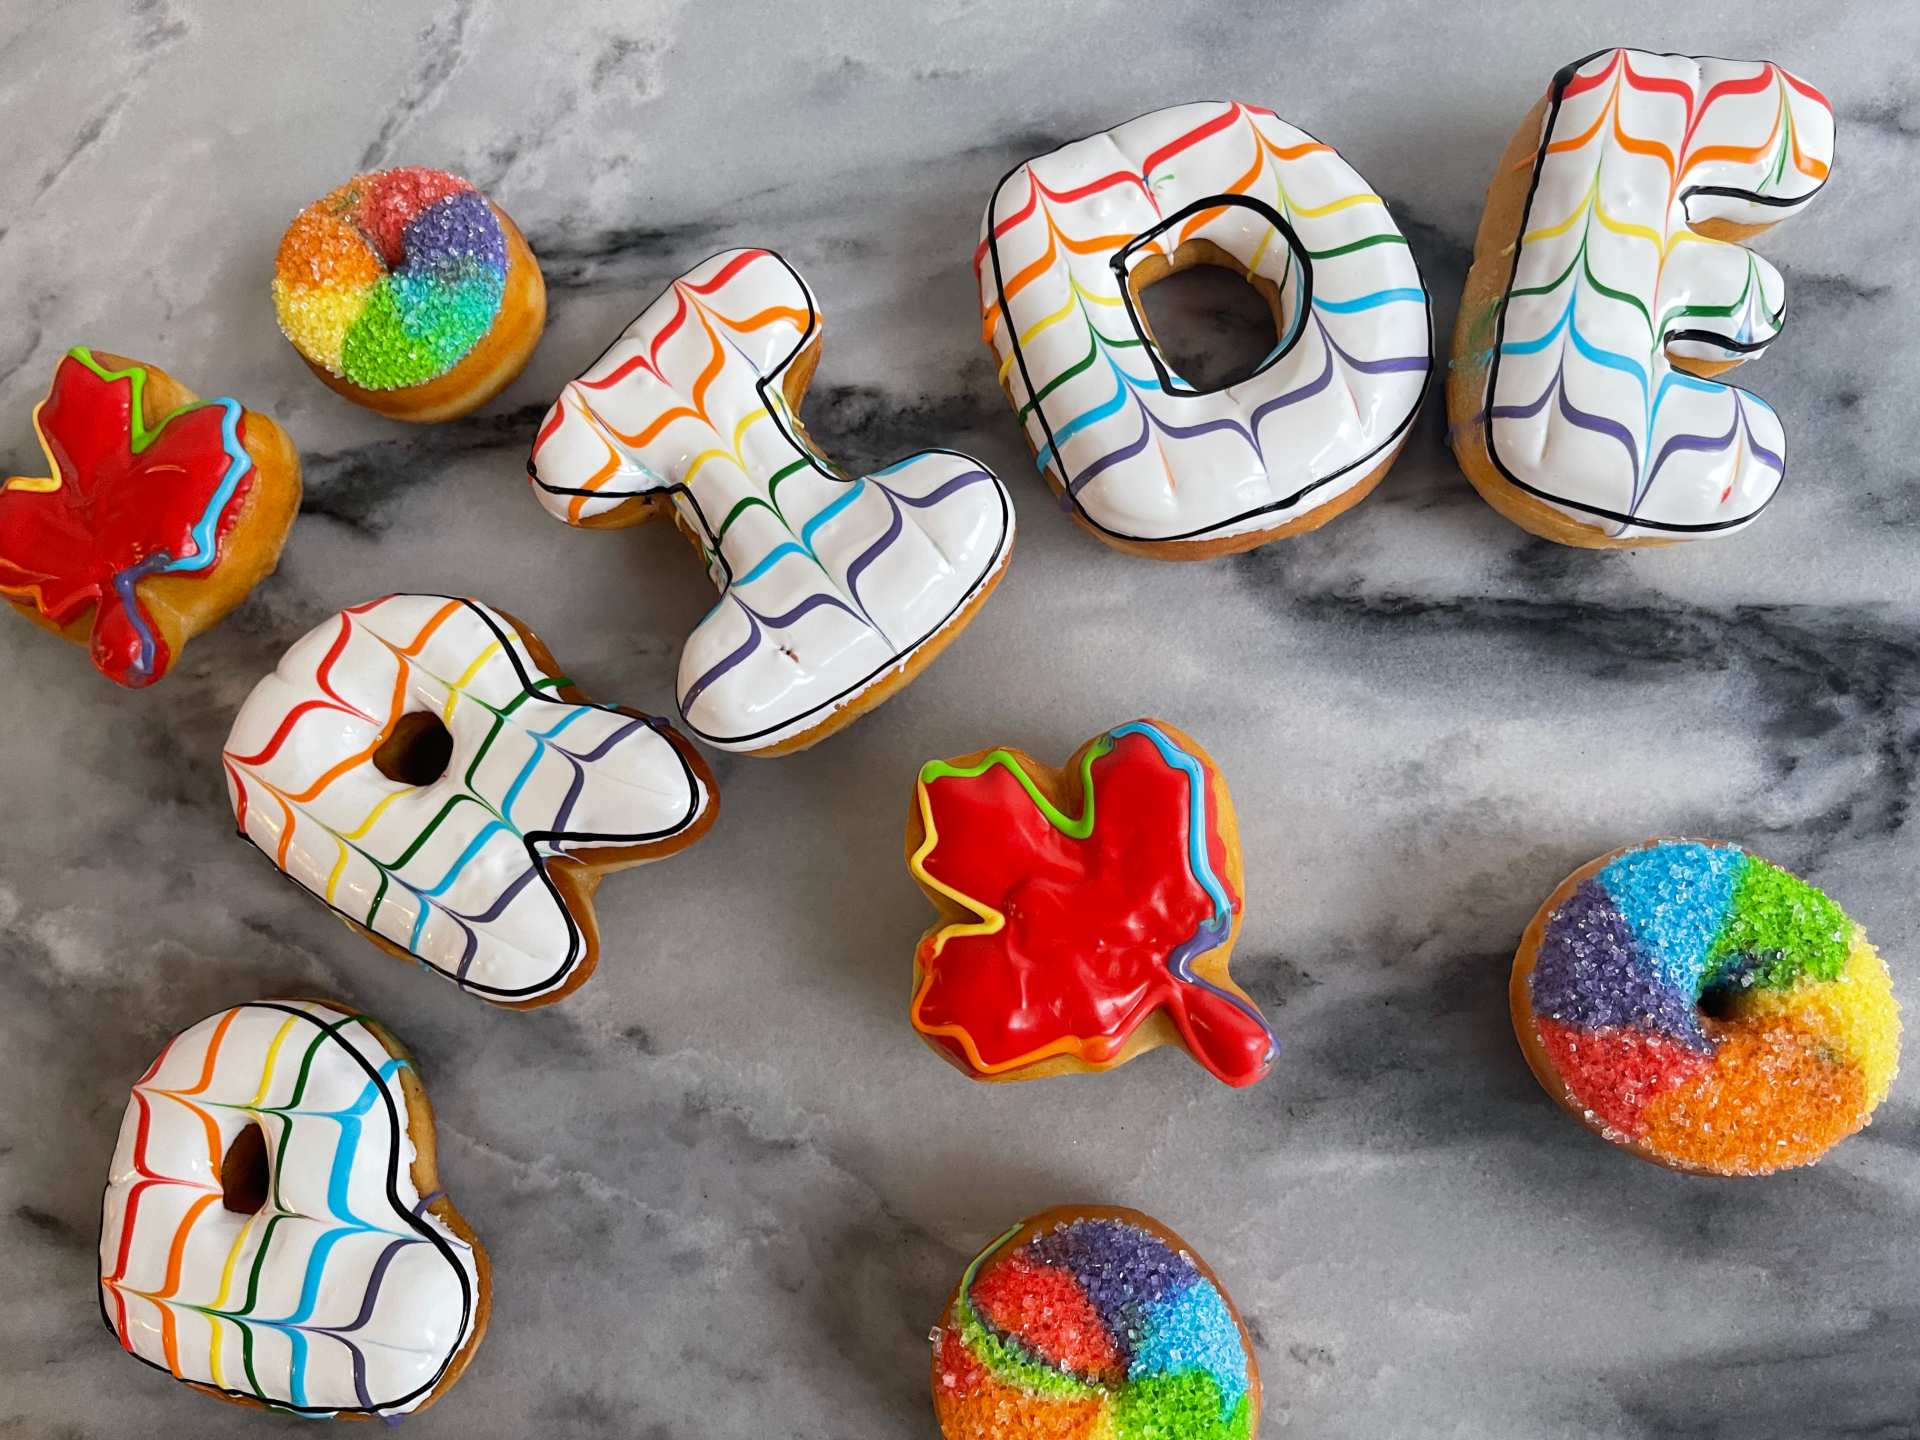 Best doughnuts in Toronto | Pride doughnuts from Letterbox Doughnuts